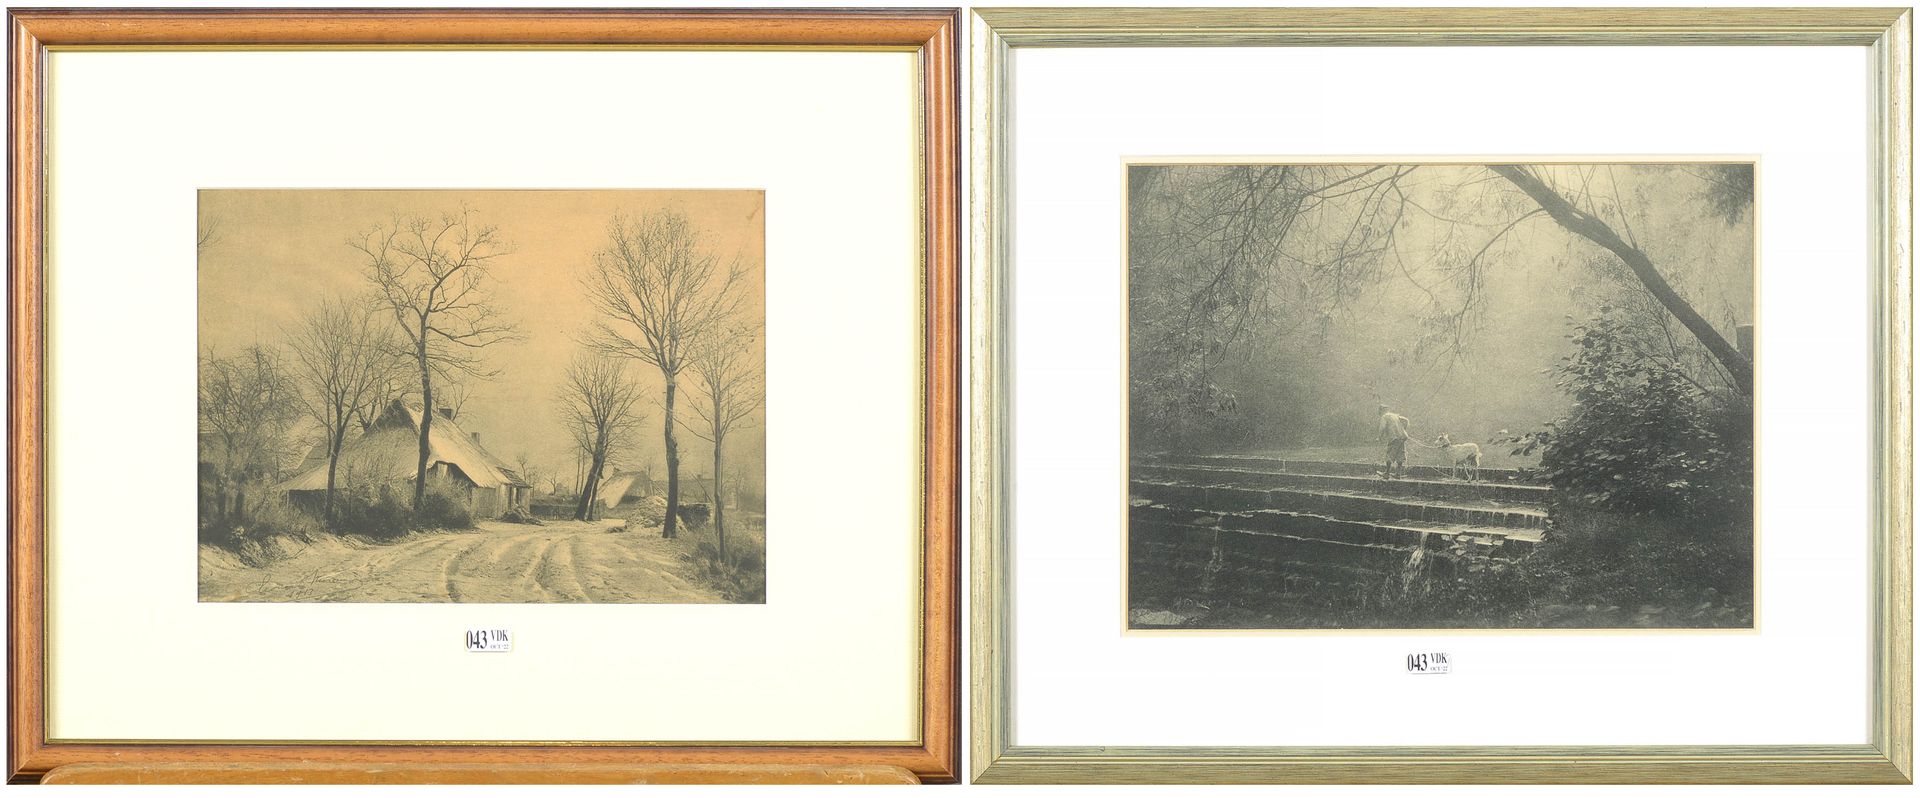 MISONNE Léonard (1870 - 1943) Zwei Fotografien in mediobromem Abzug "Hiver en Ca&hellip;